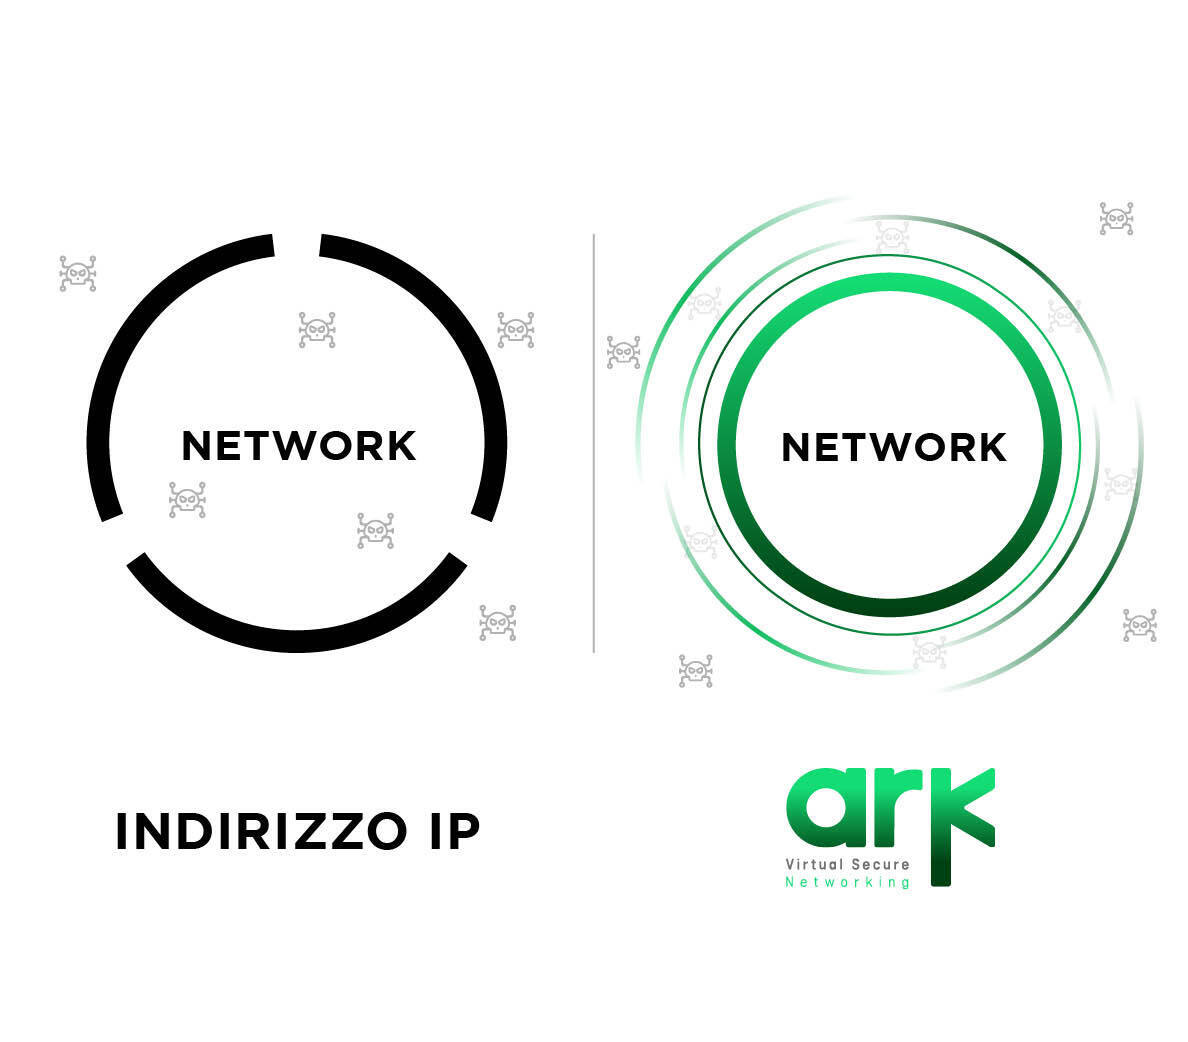 ark virtual secure networking